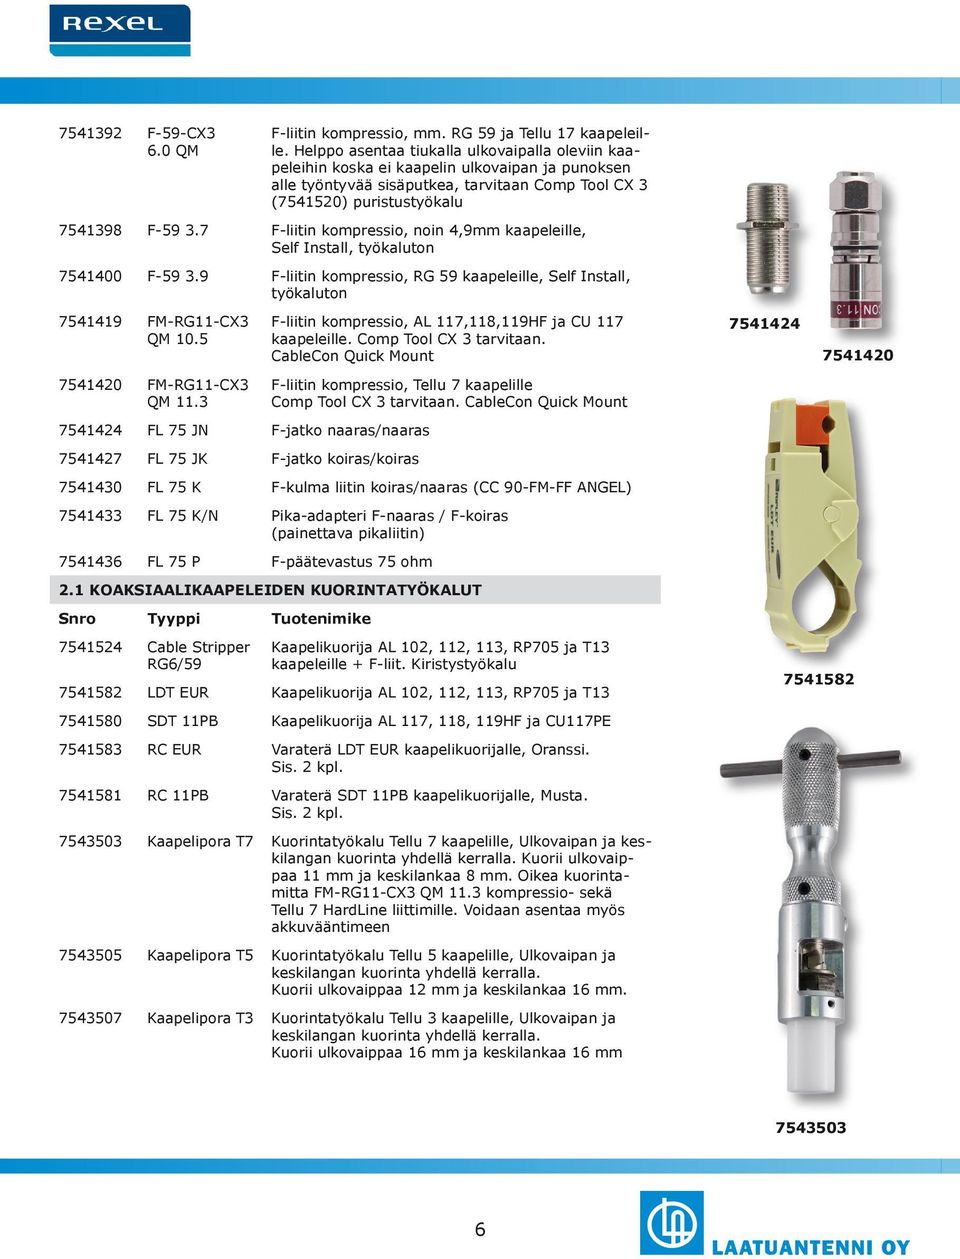 7 F-liitin kompressio, noin 4,9mm kaapeleille, Self Install, työkaluton 7541400 F-59 3.9 F-liitin kompressio, RG 59 kaapeleille, Self Install, työkaluton 7541419 FM-RG11-CX3 QM 10.